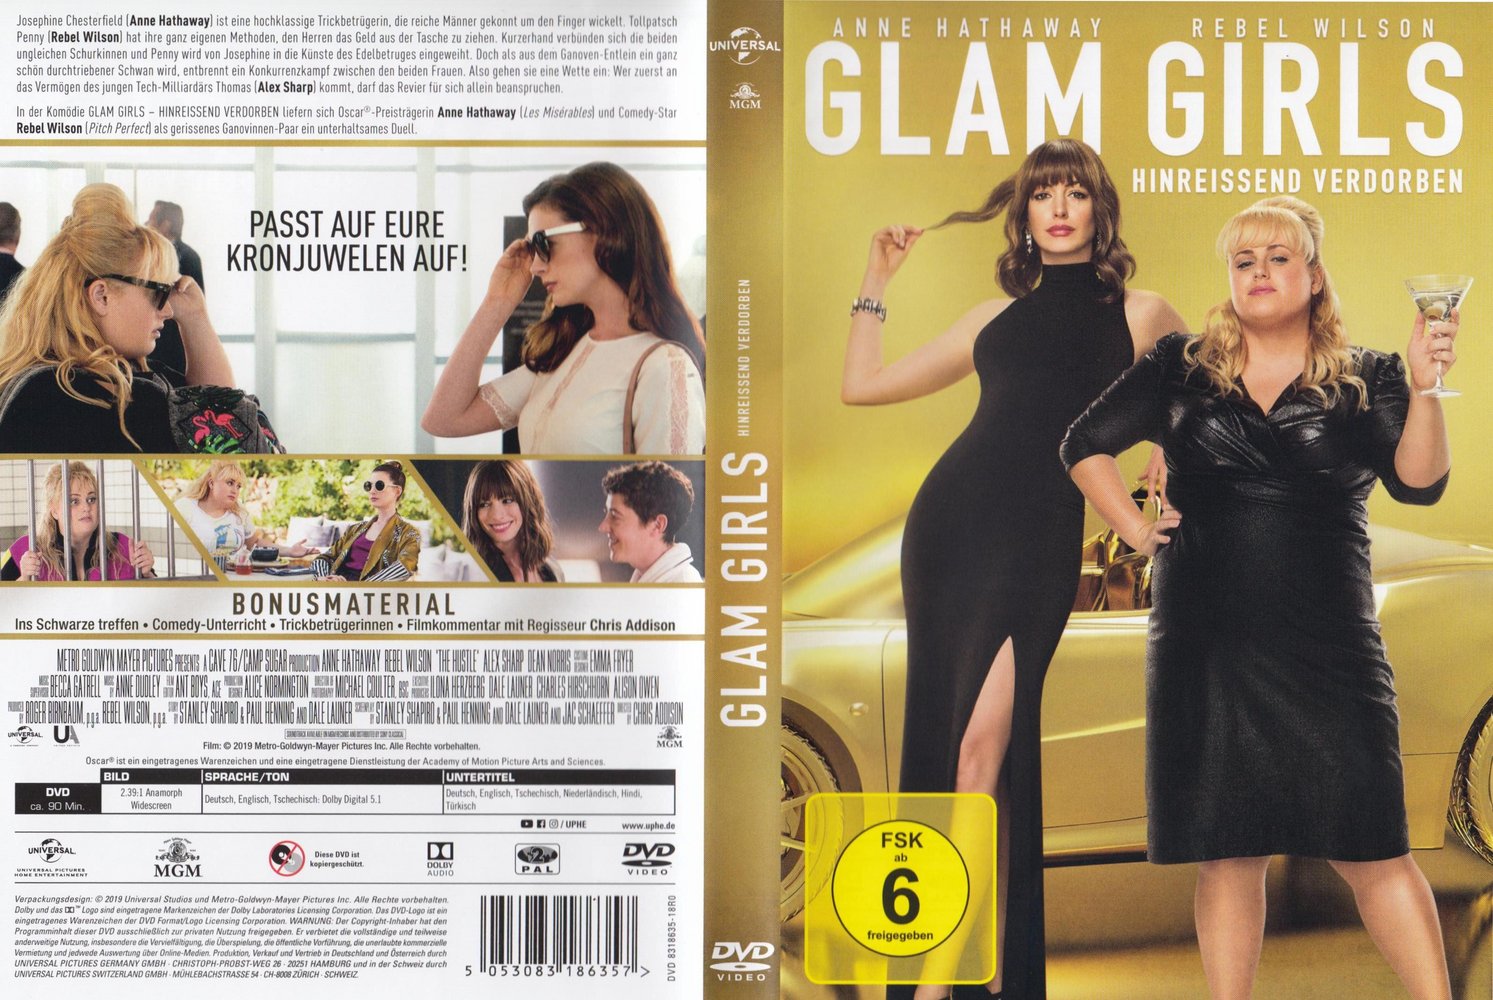 Glam Girls: DVD oder Blu-ray leihen - VIDEOBUSTER